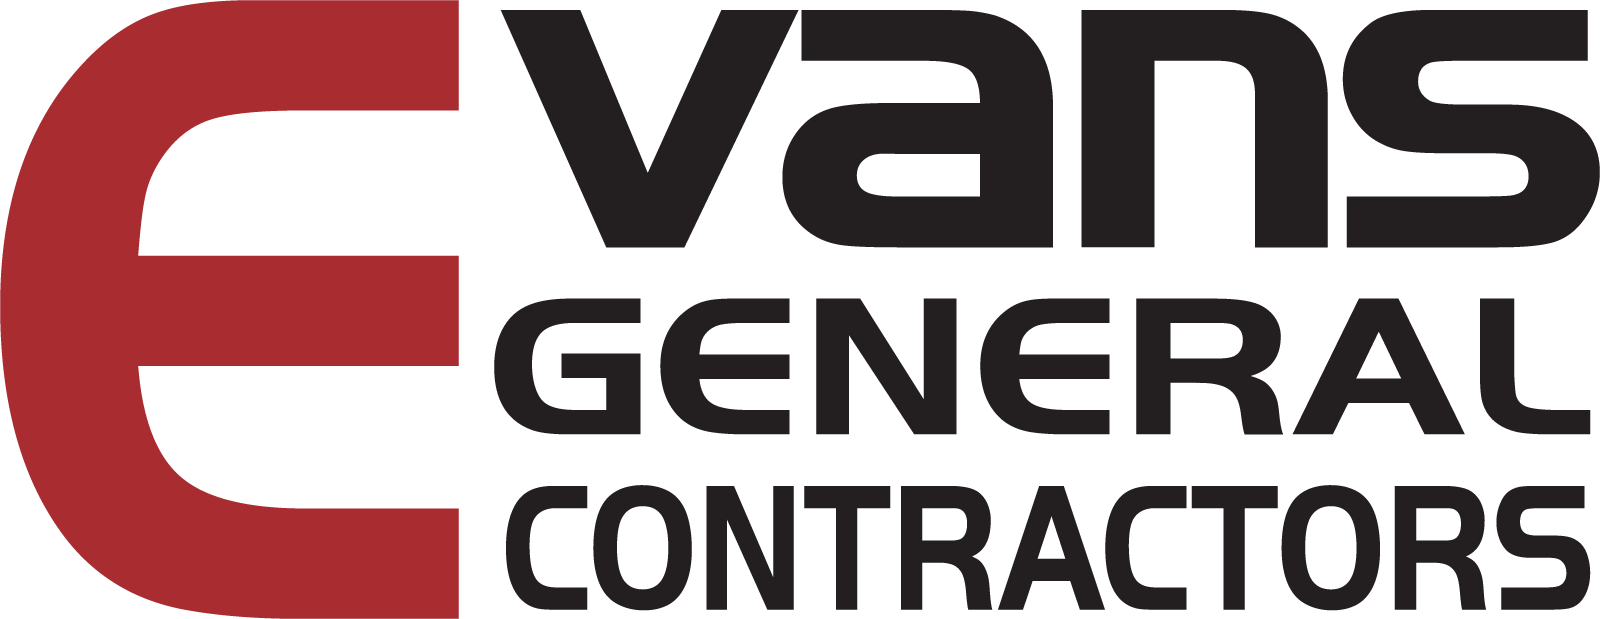 Evans General Contractors logo